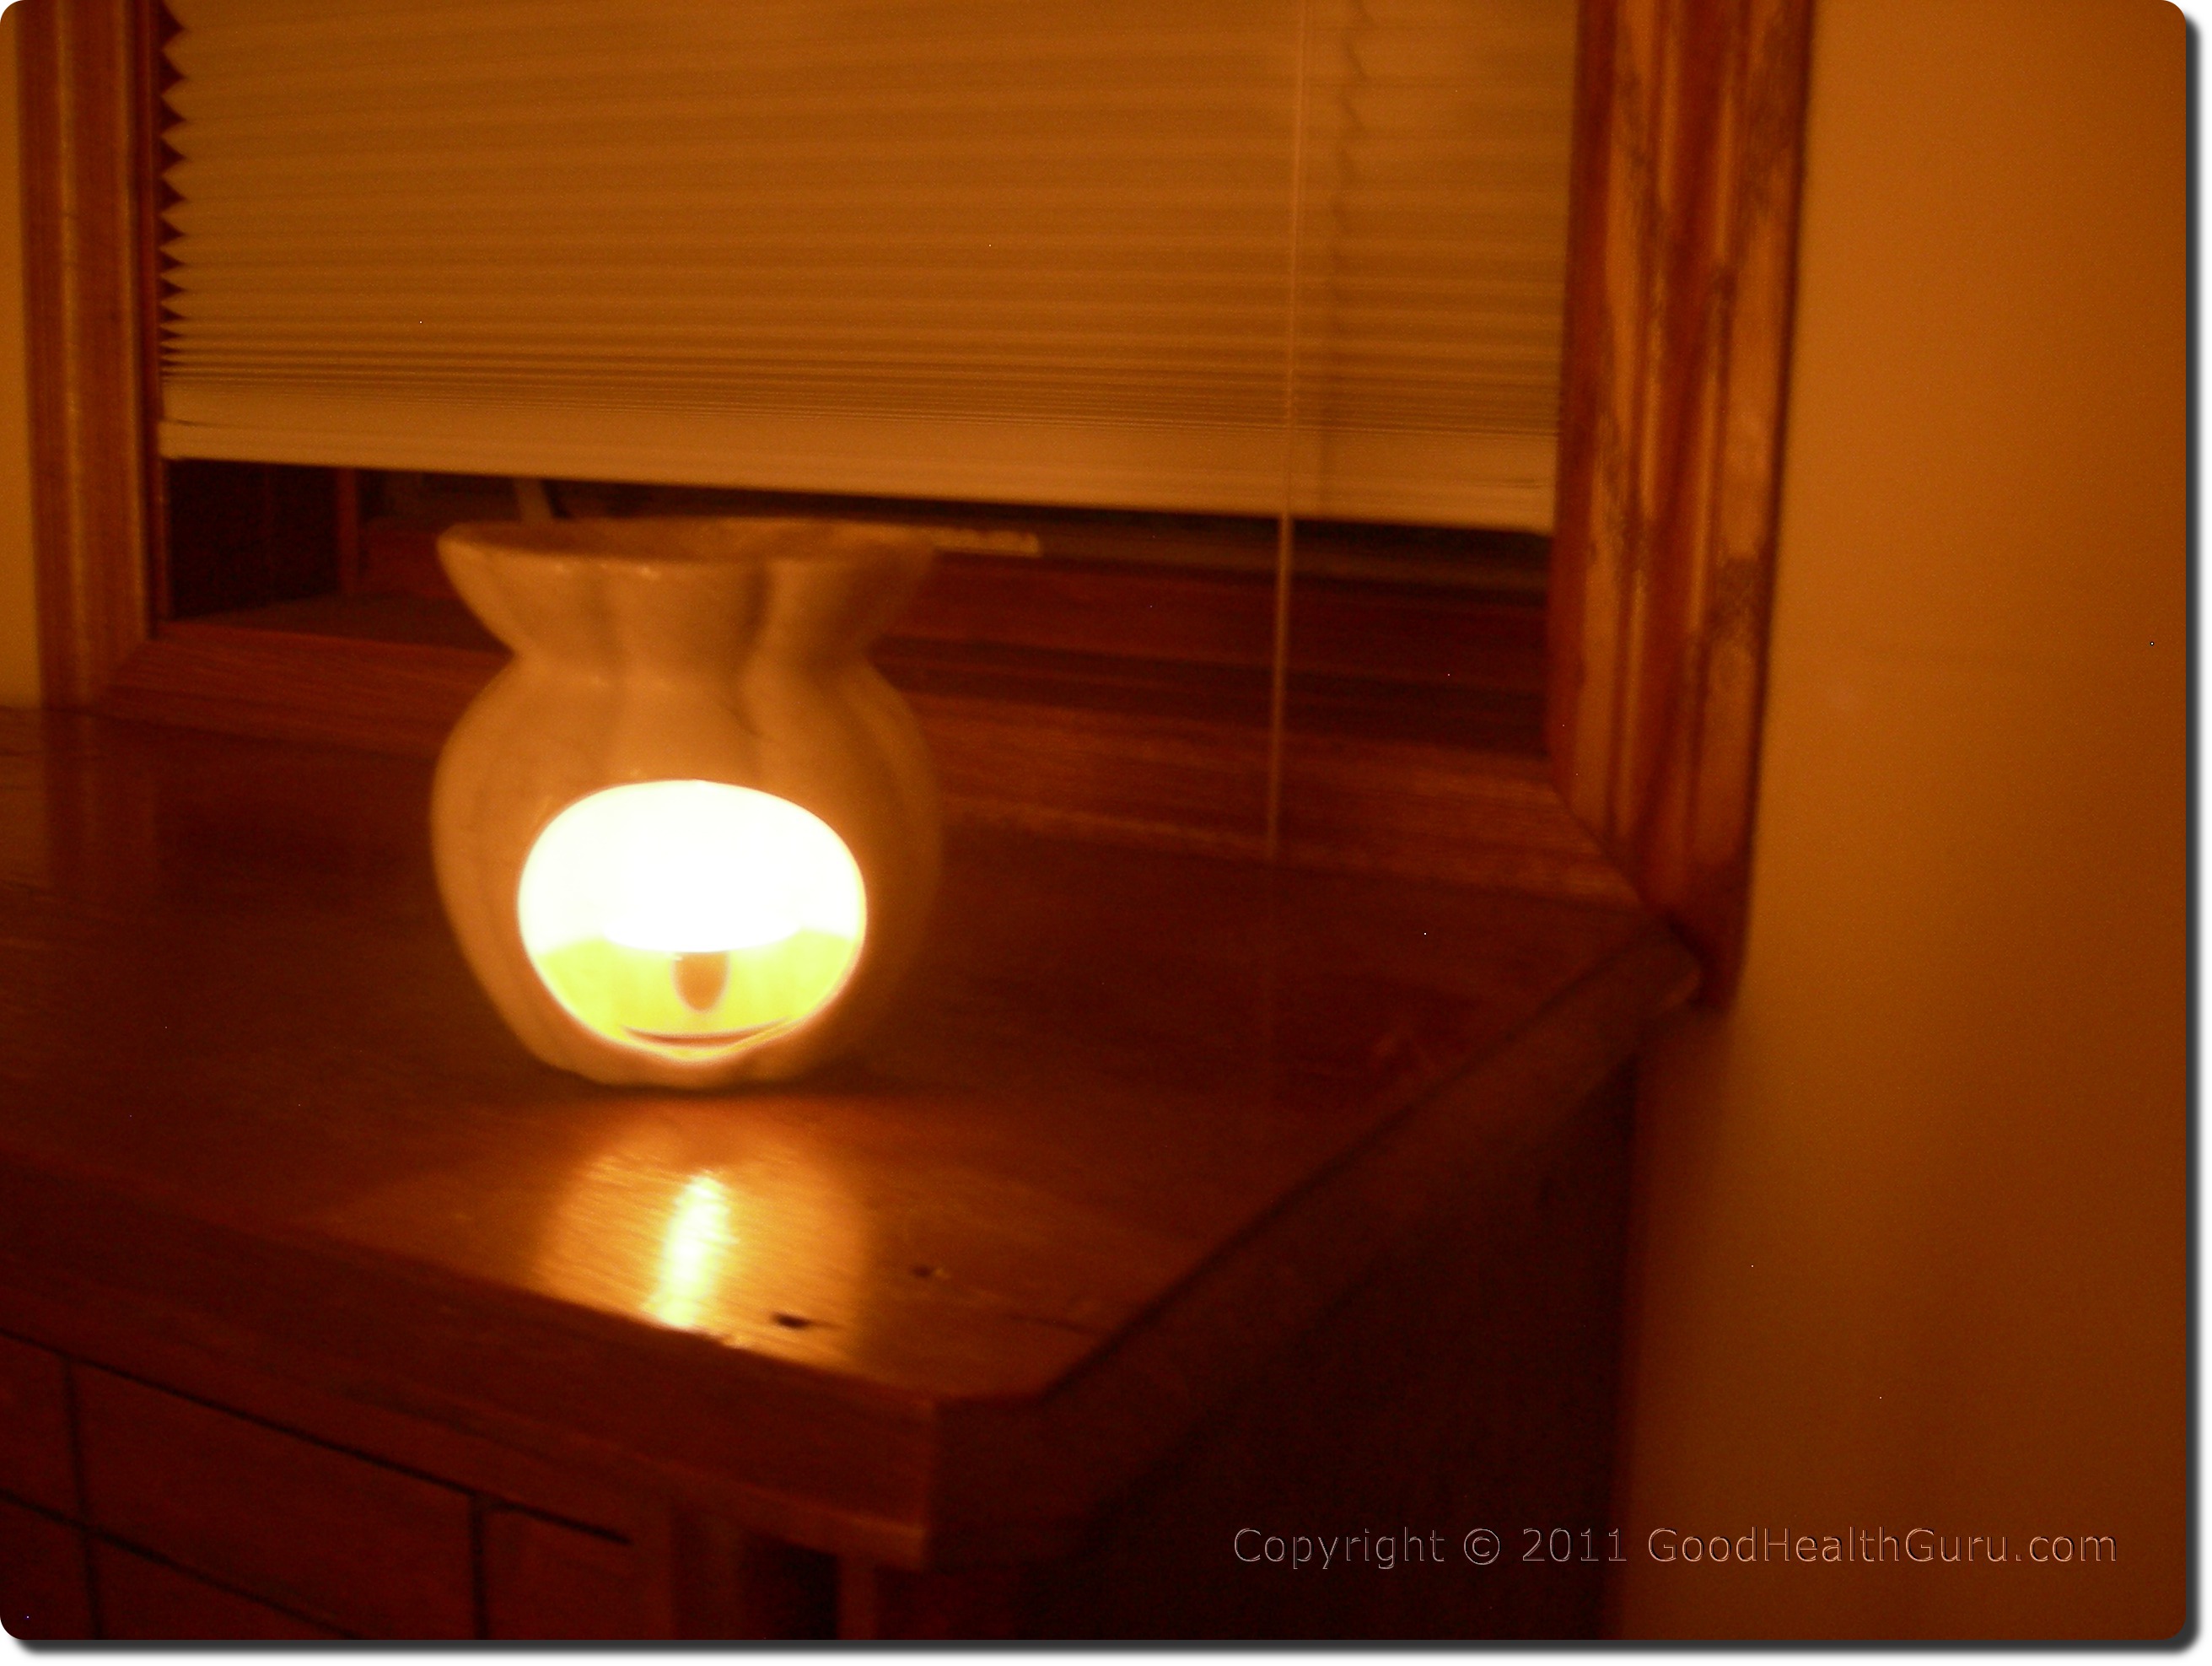 Image of Candlelight